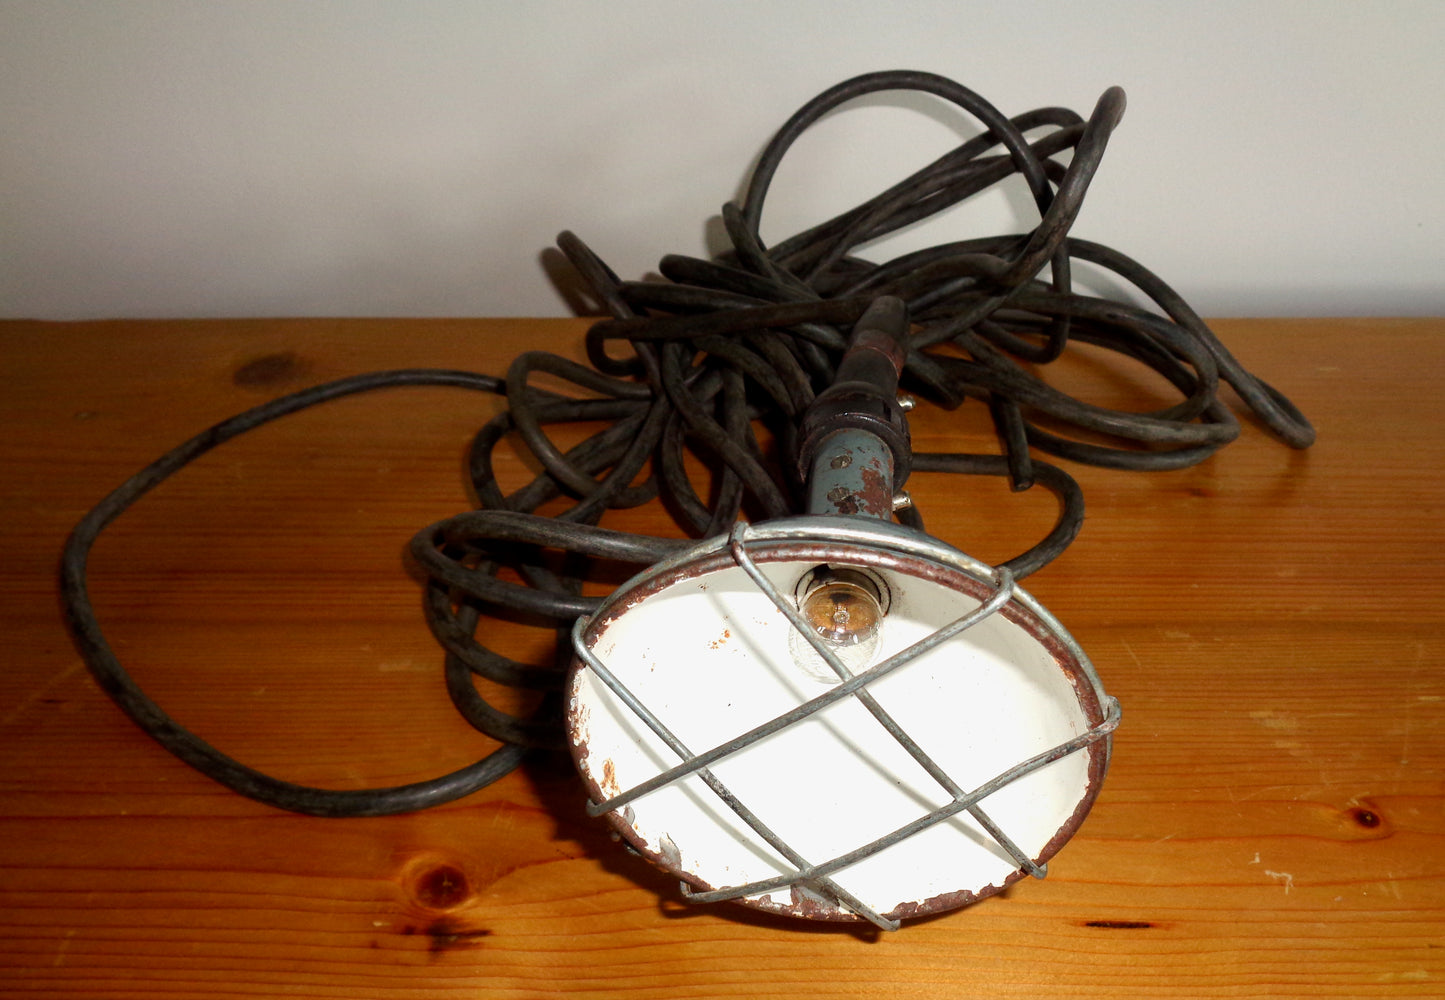 Vintage Kelvin Norton Clip On Inspection Light With Power Supply Lead For Ferret AFV